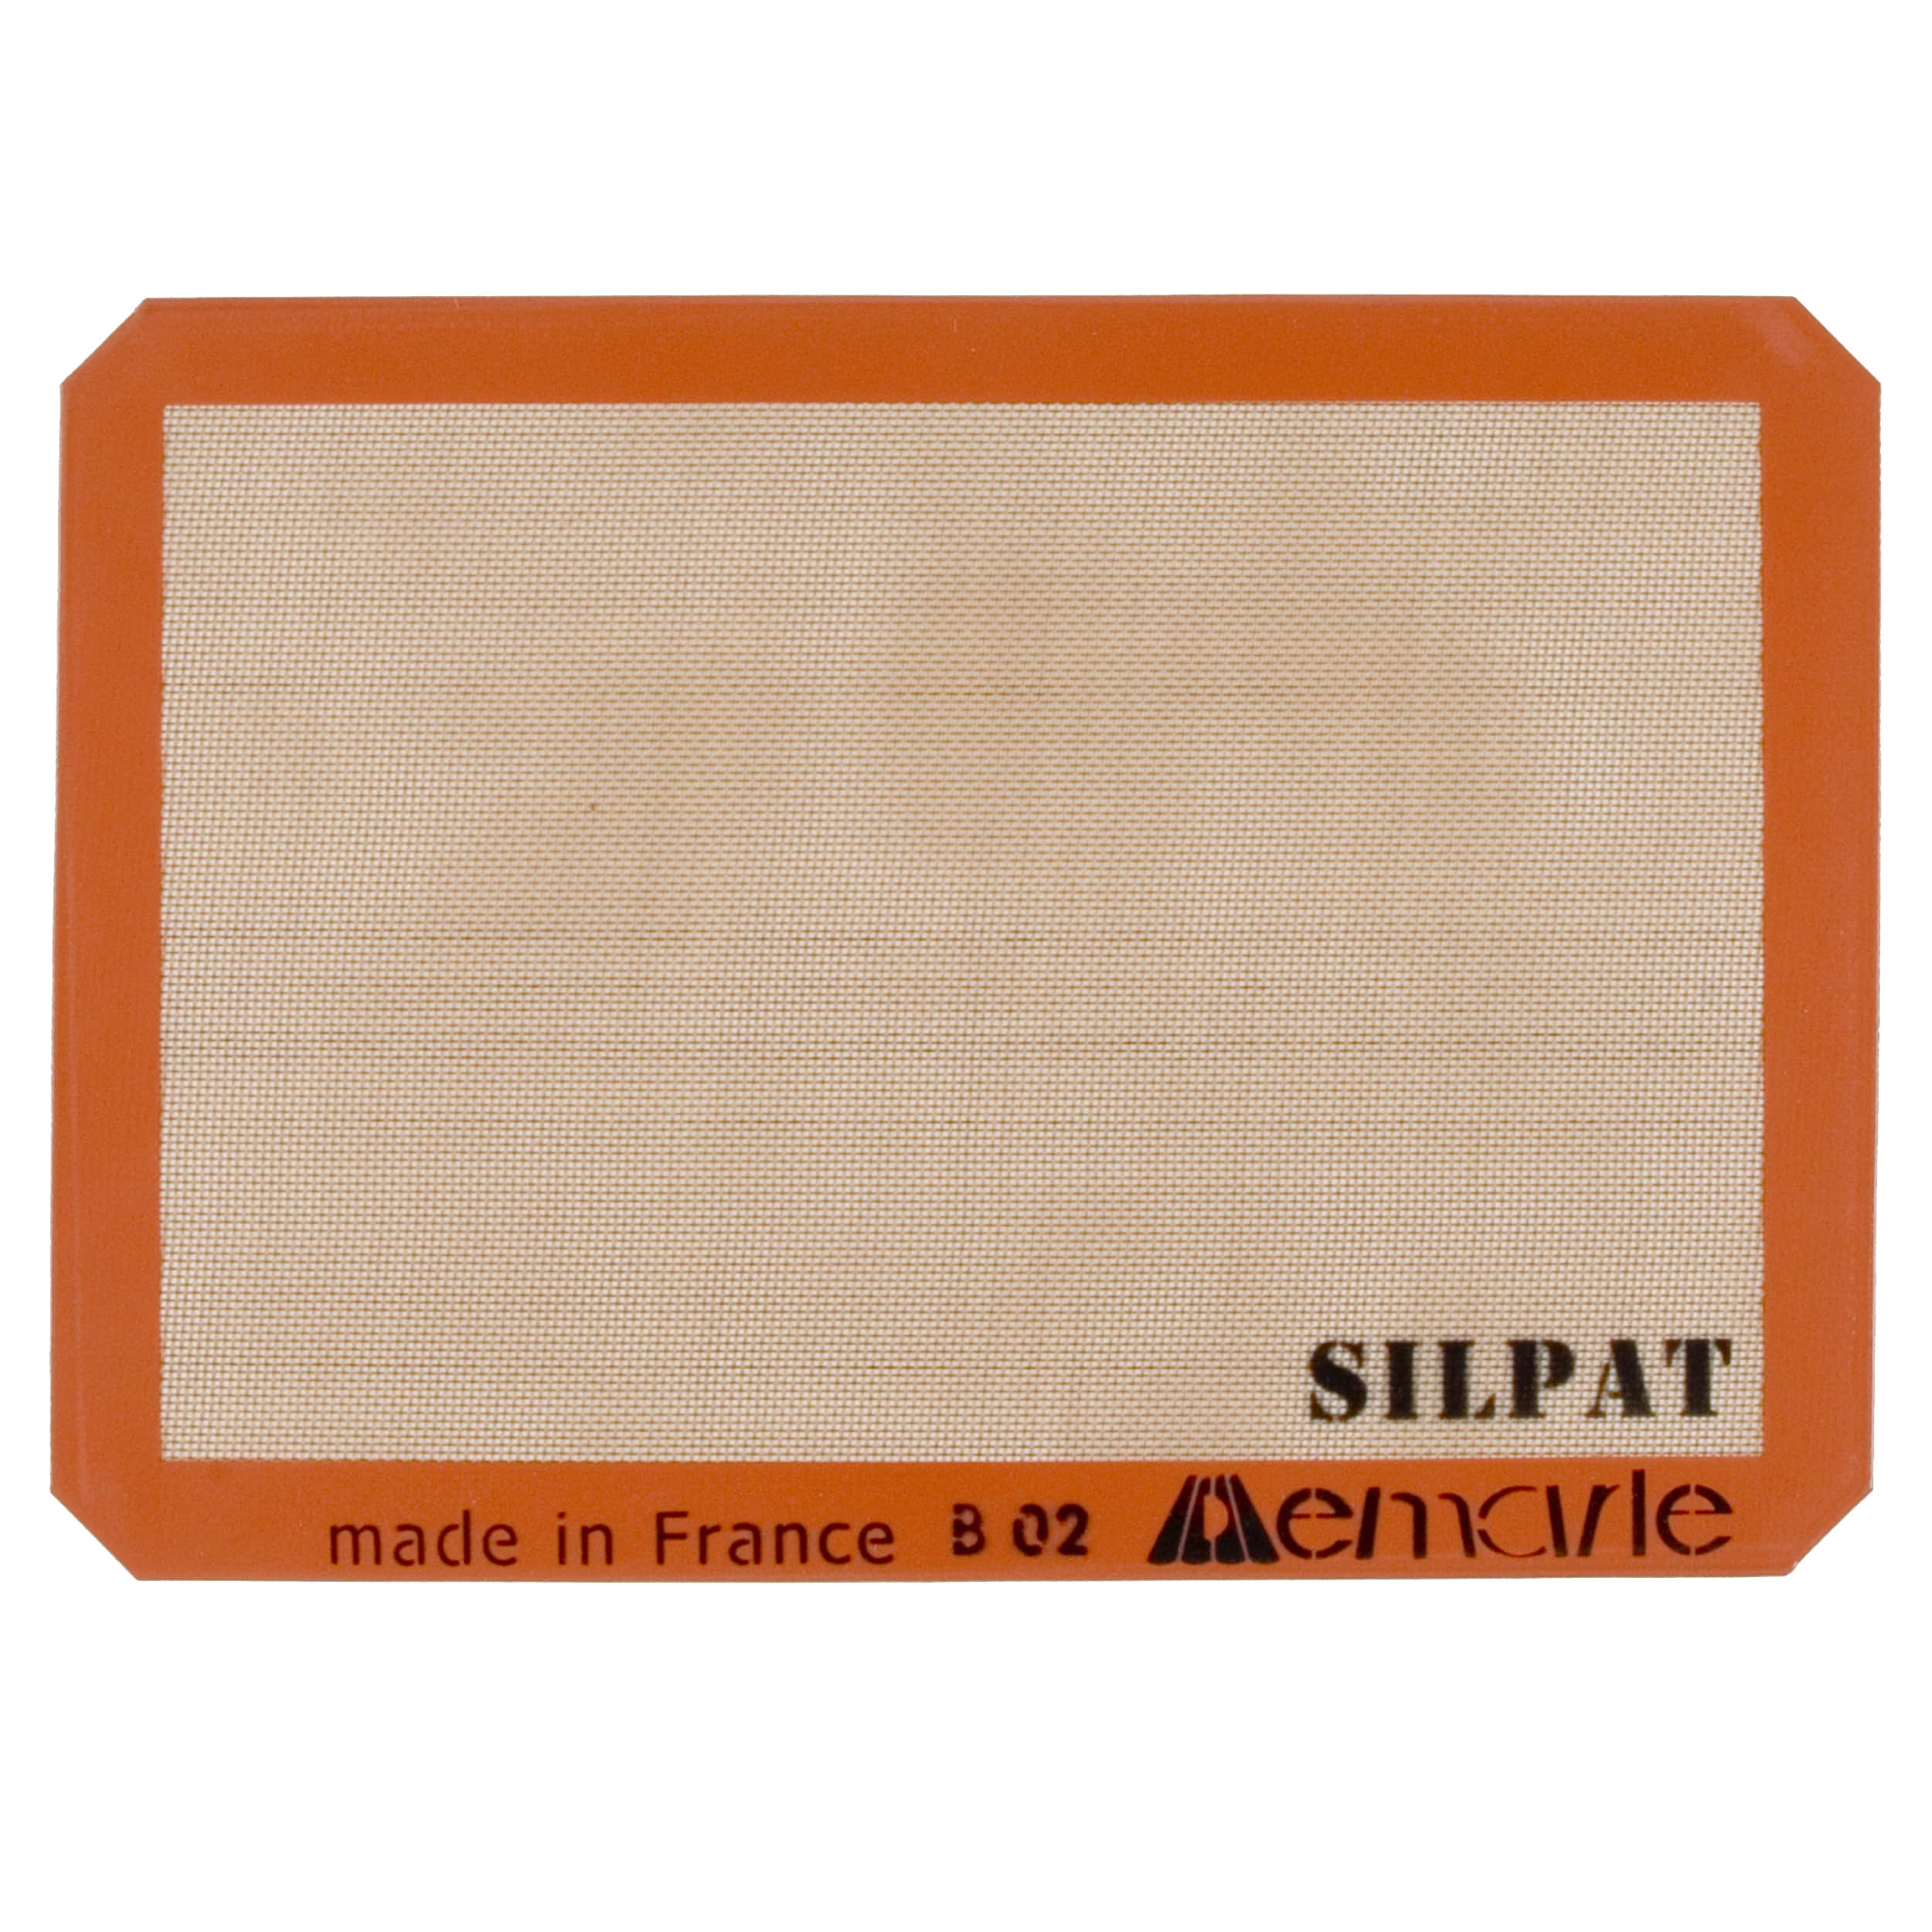 silpat non stick silicone baking mat